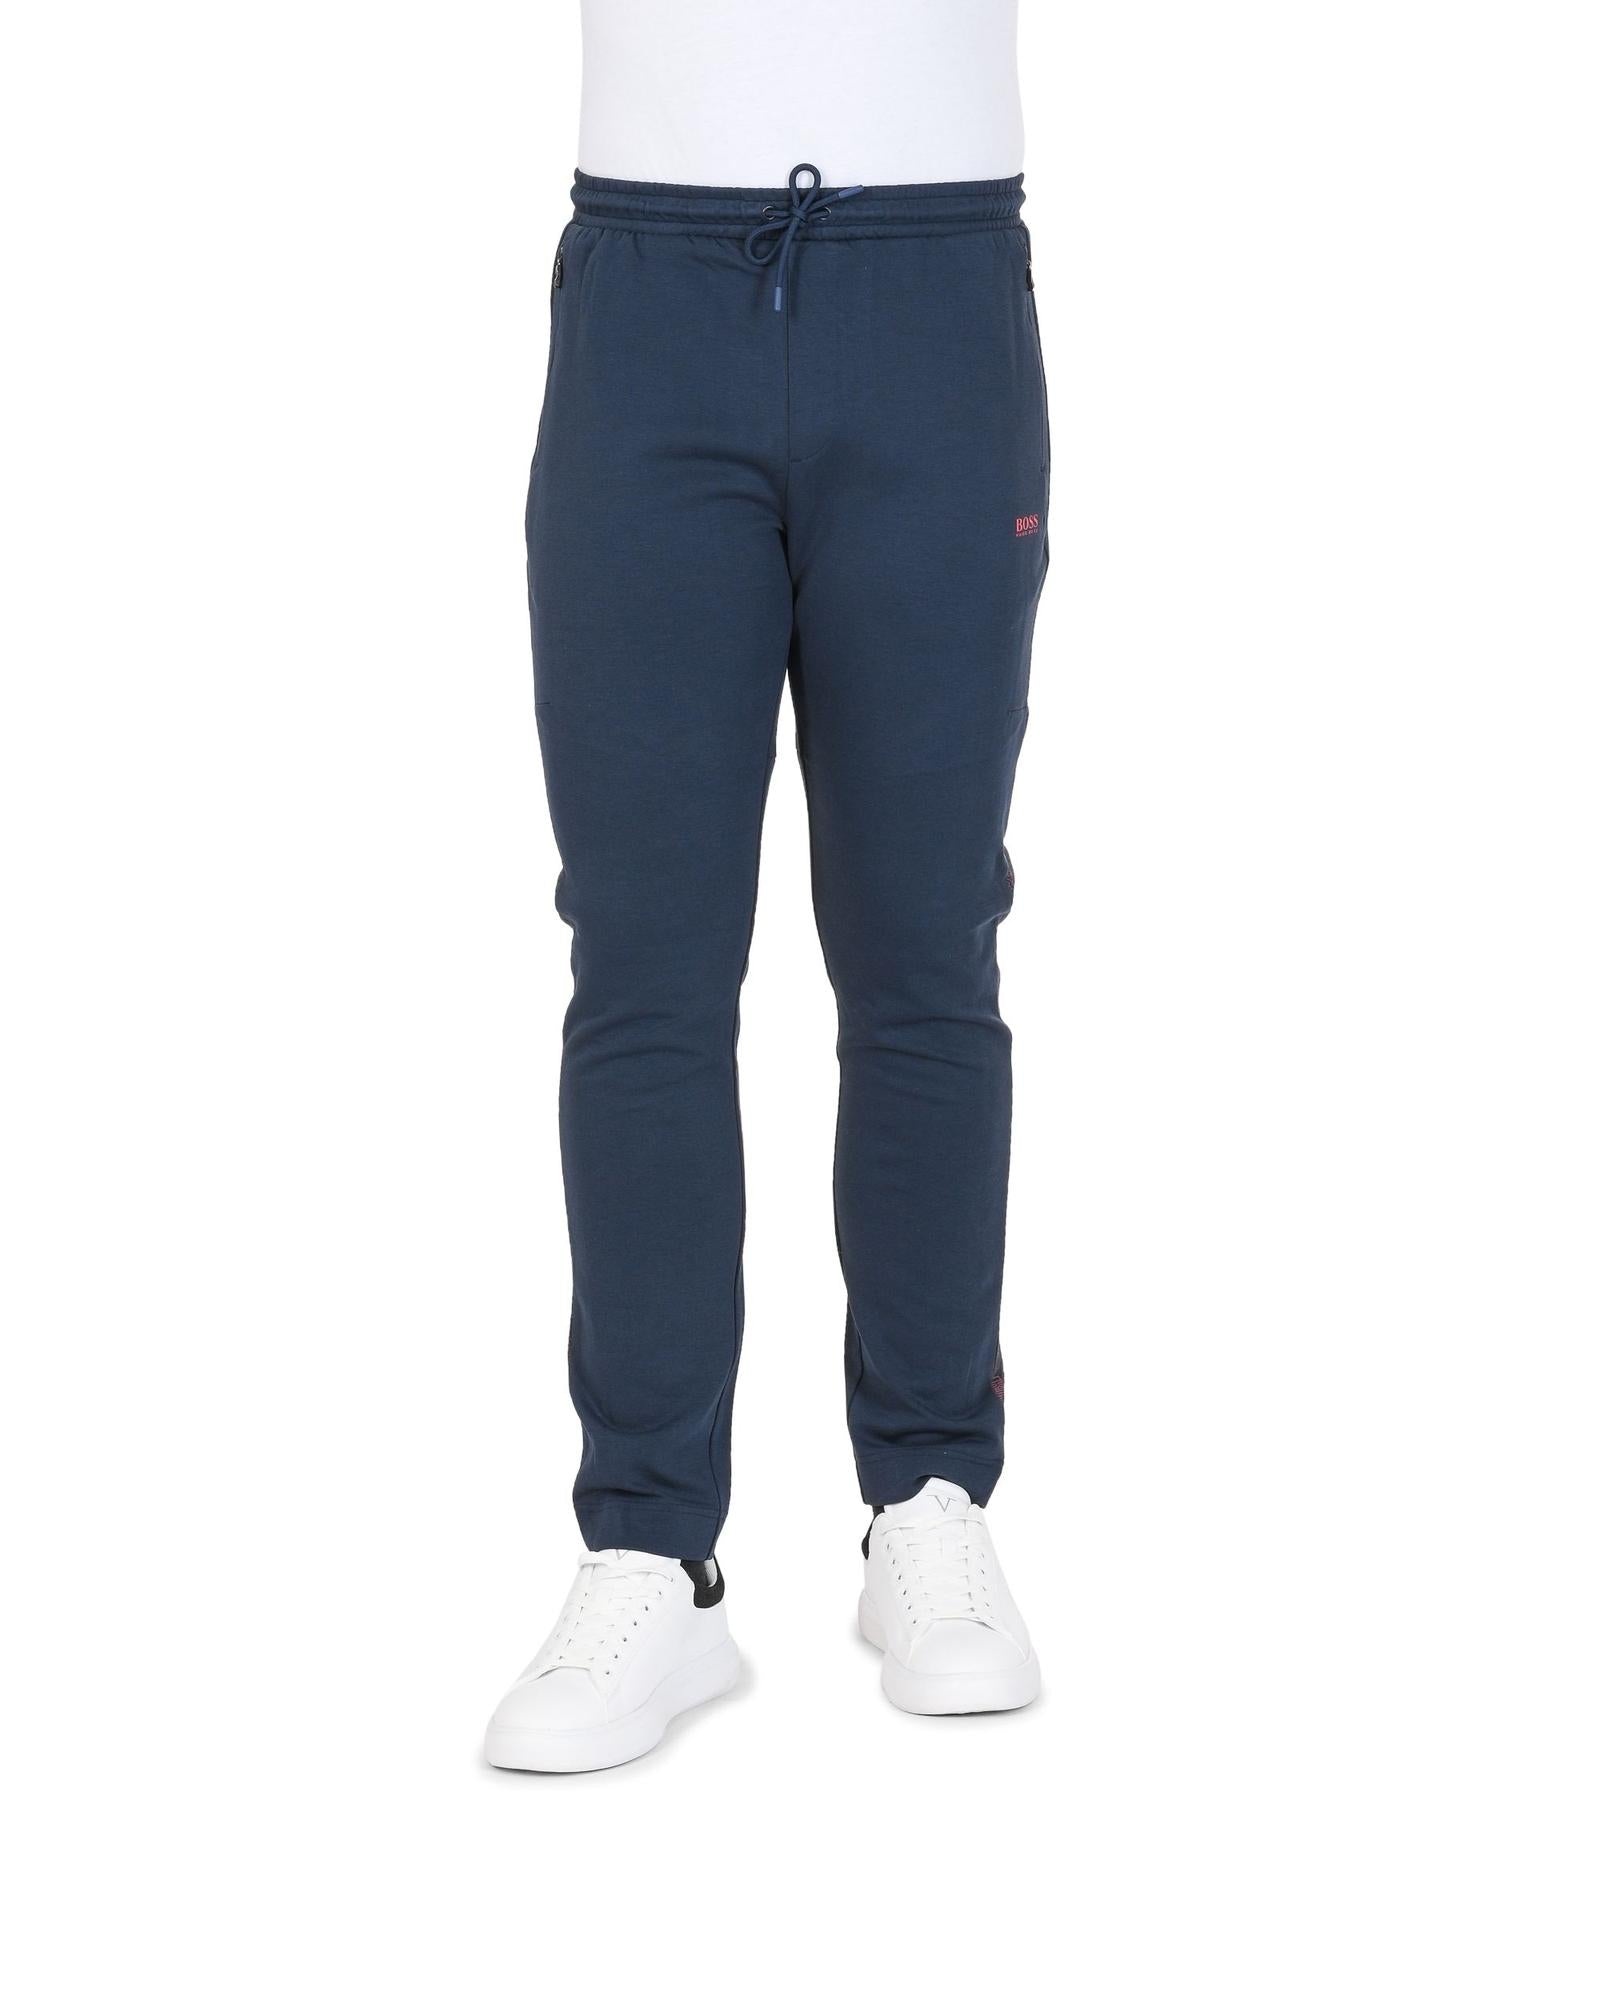 Men's Stretch Cotton Blend Navy Pants in Navy blue - M